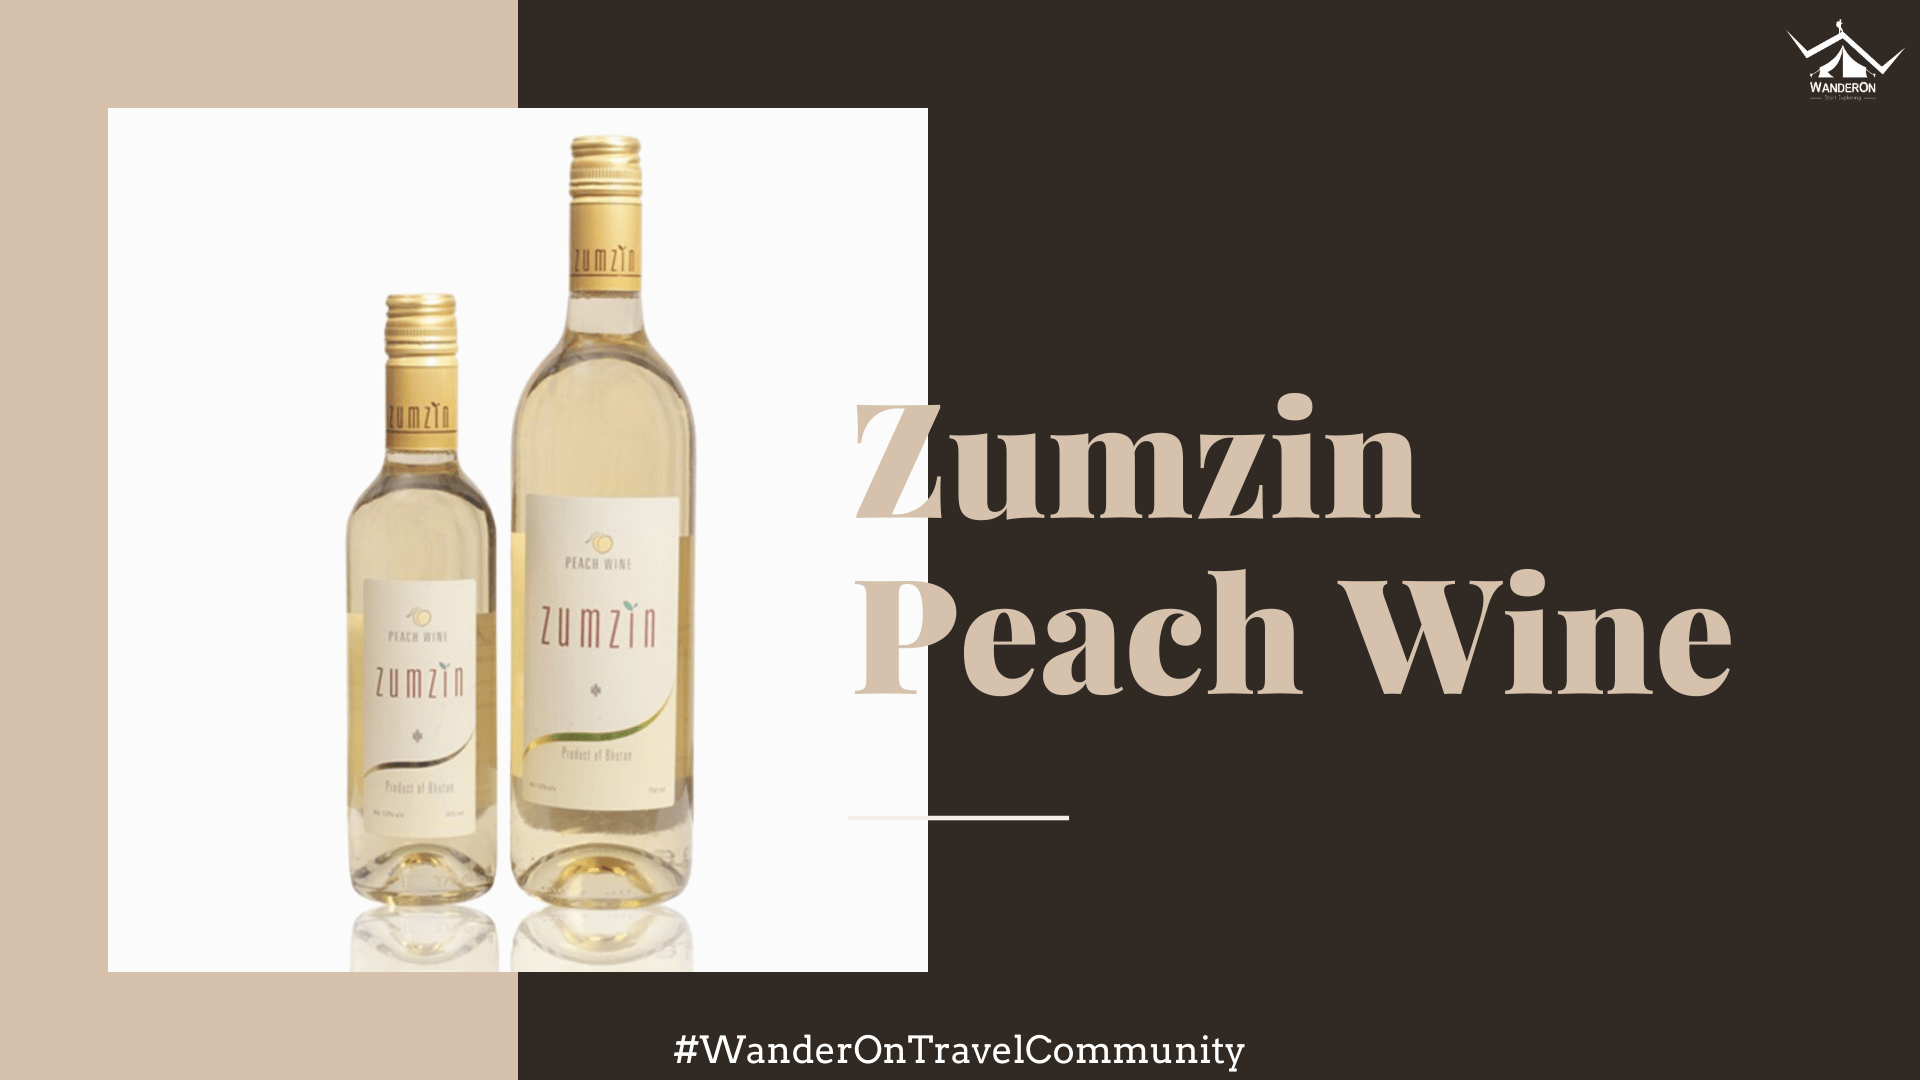 Zumzin Peach Wine